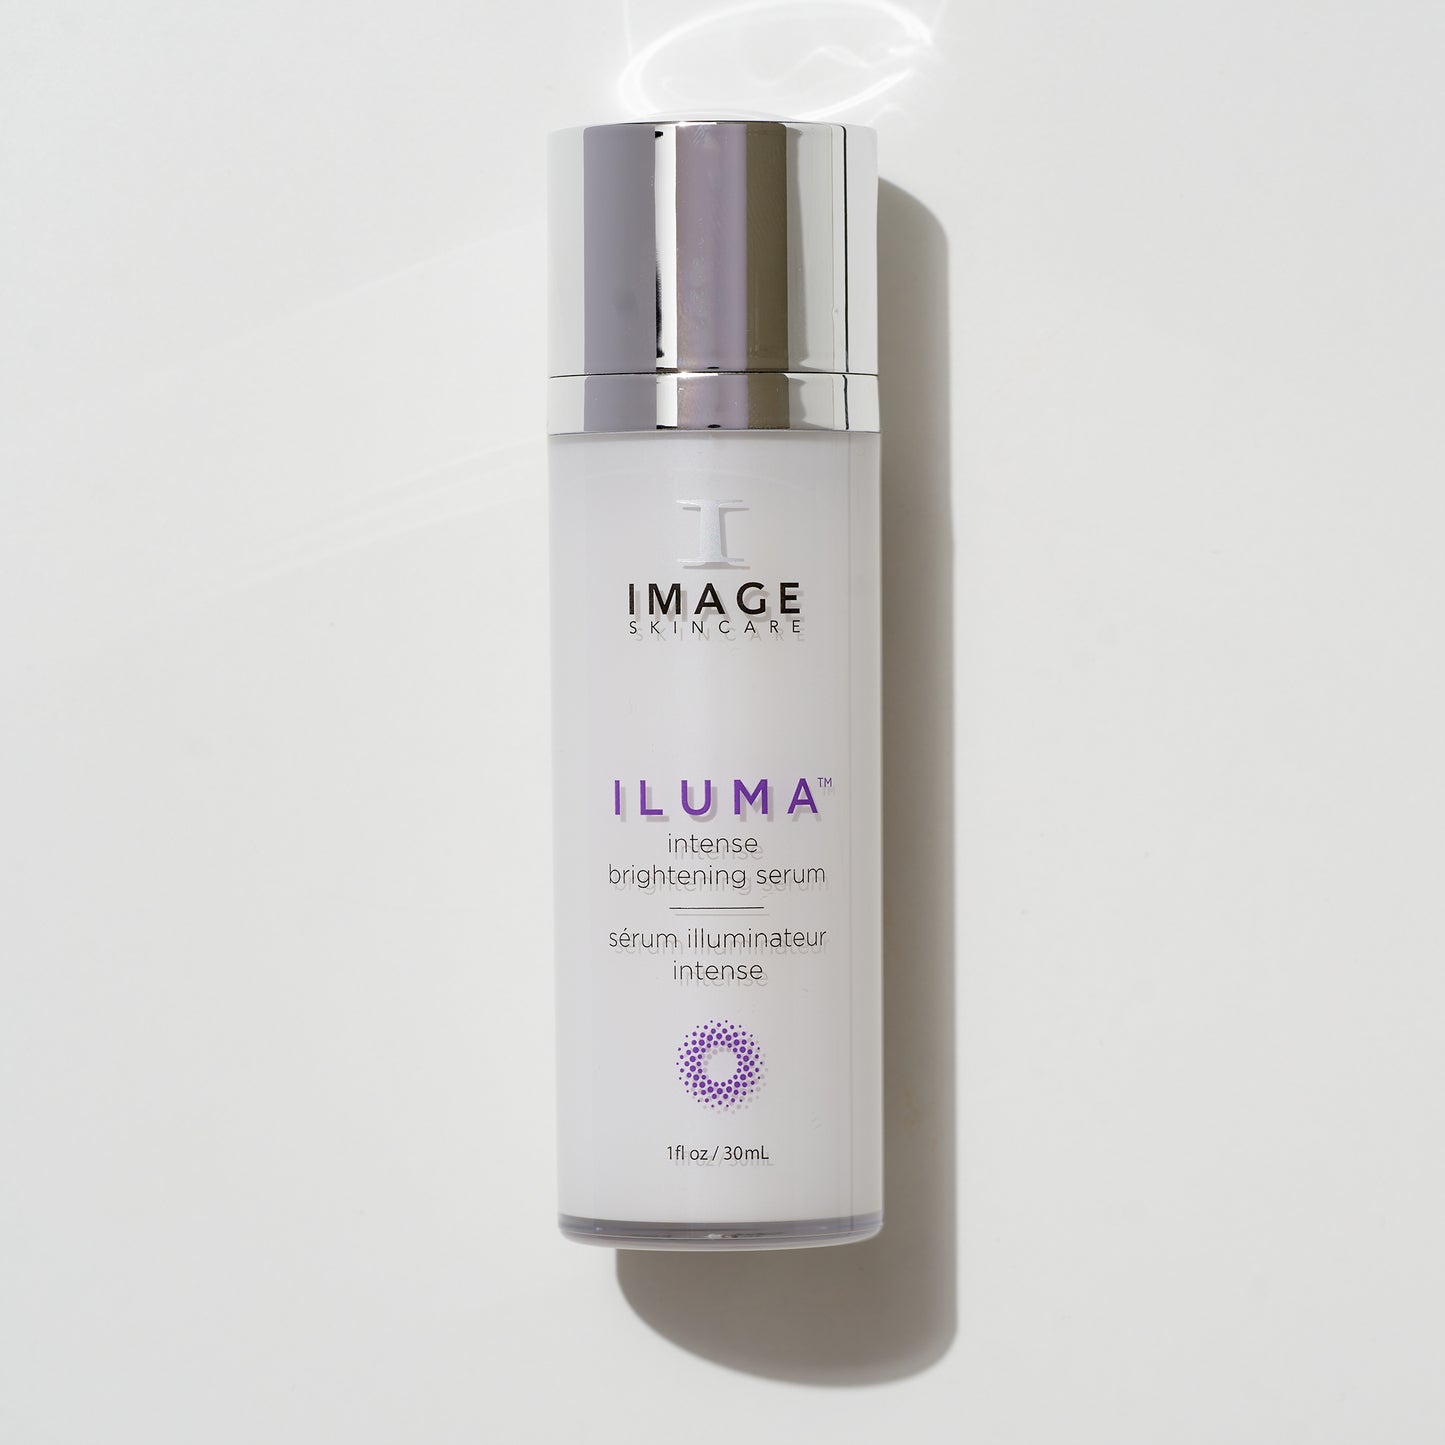 ILUMA intense brightening serum, Image Skincare